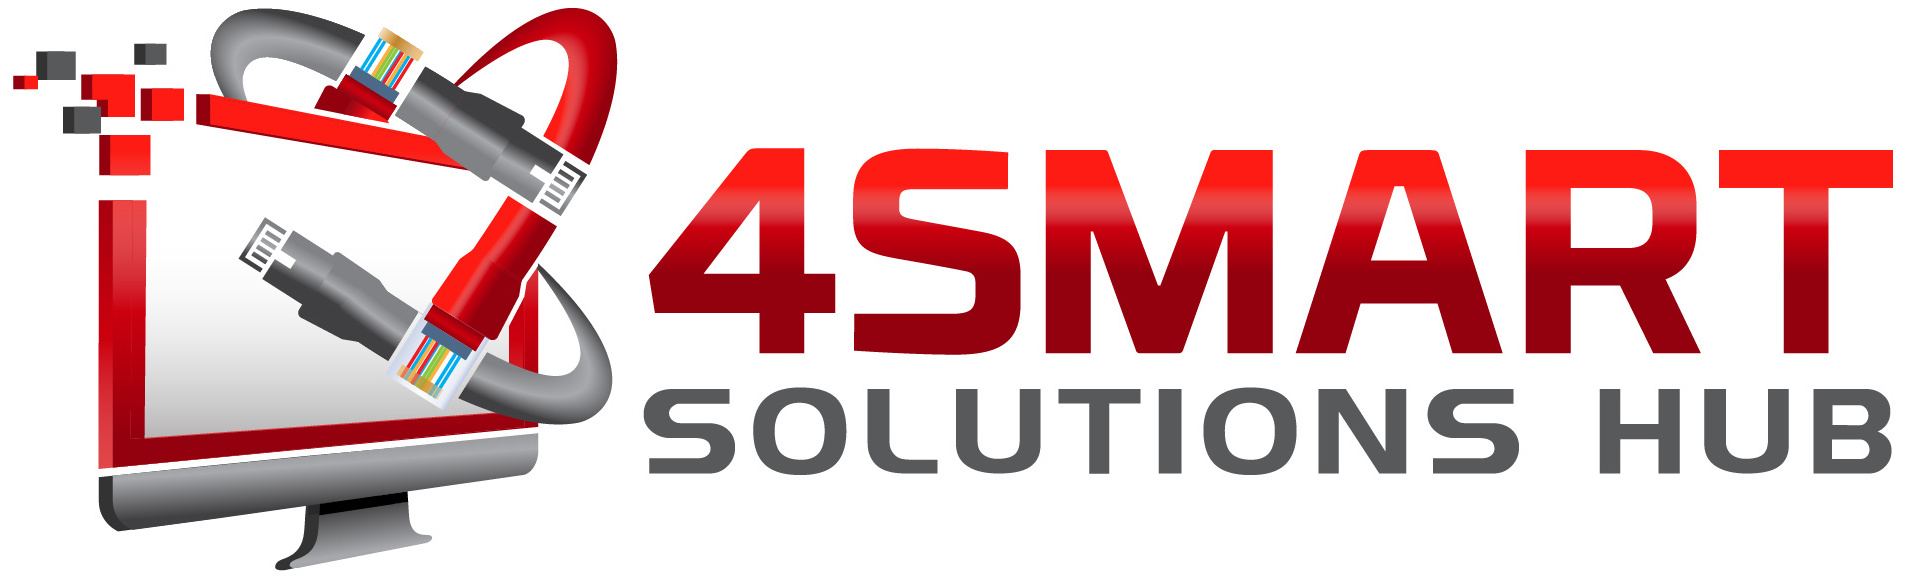 4Smart Solutions Hub